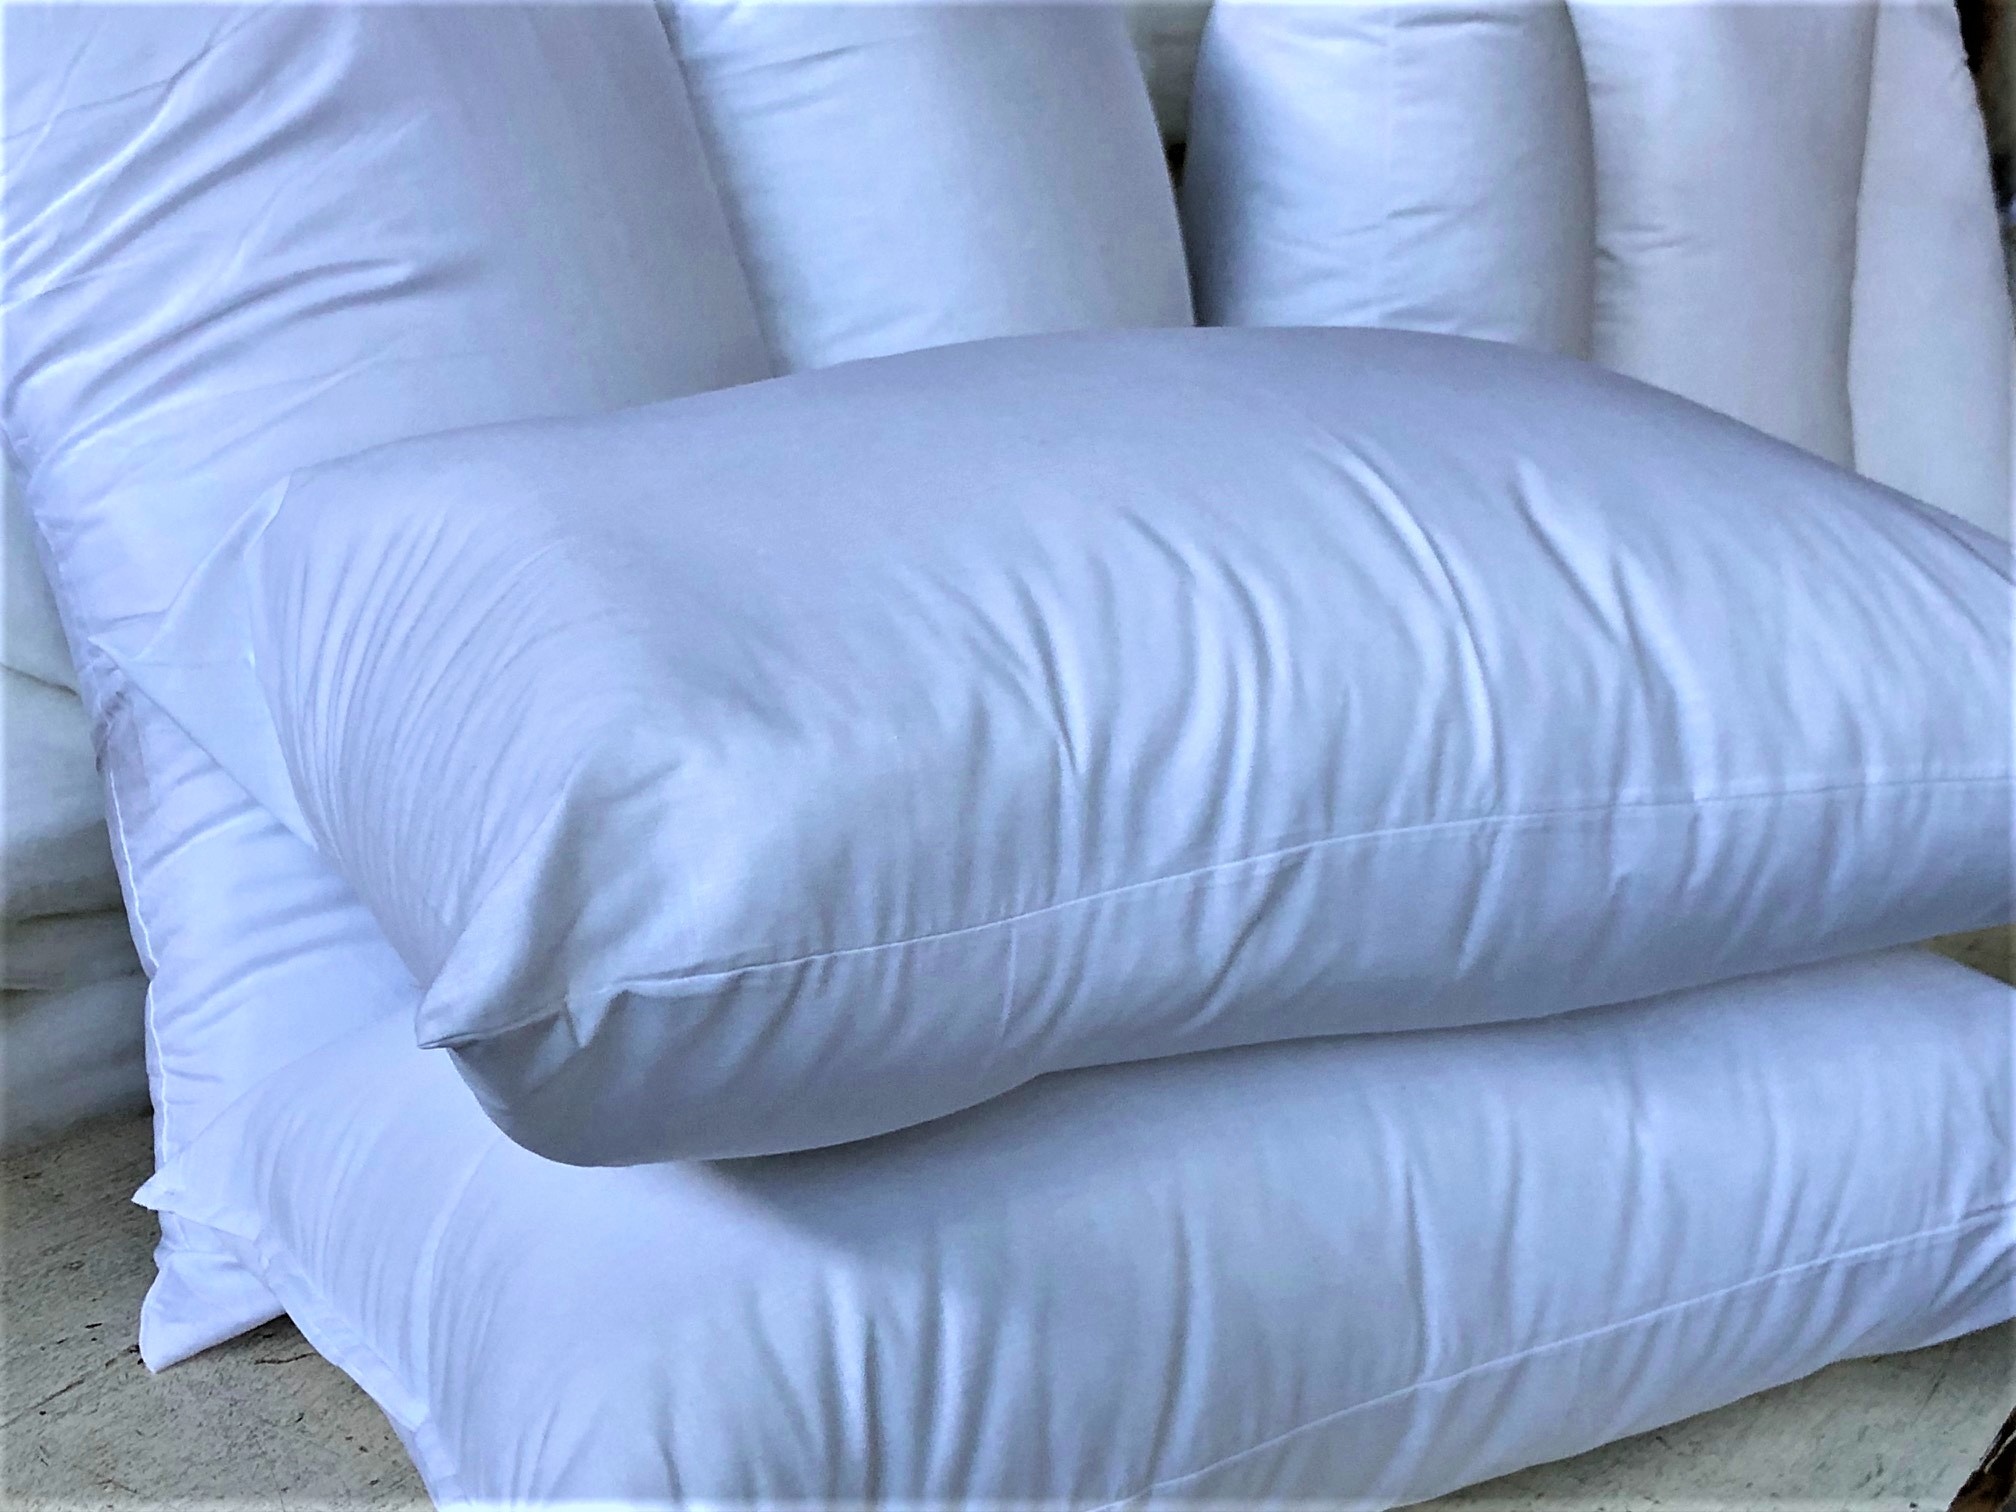 Pillows with polyester hollow fibre